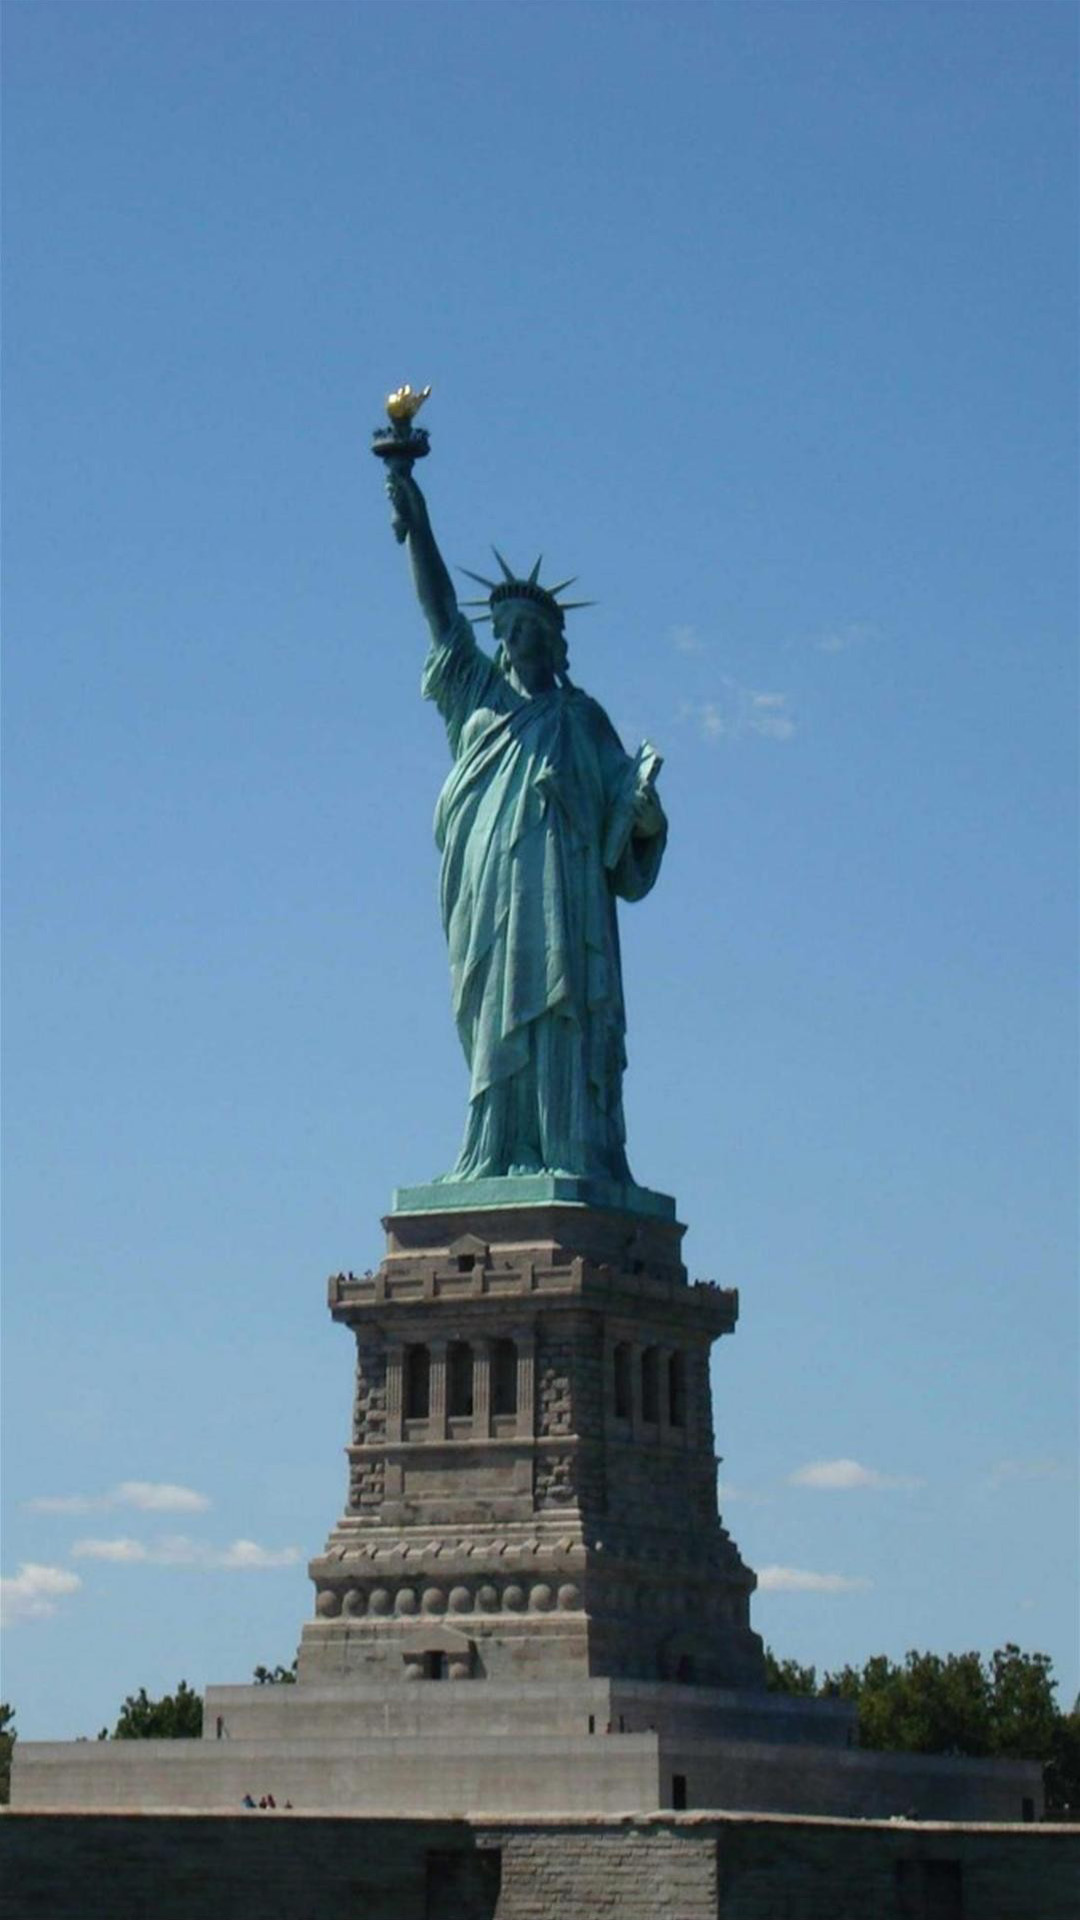 Us Statue Of Liberty Galaxy Note Wallpaper